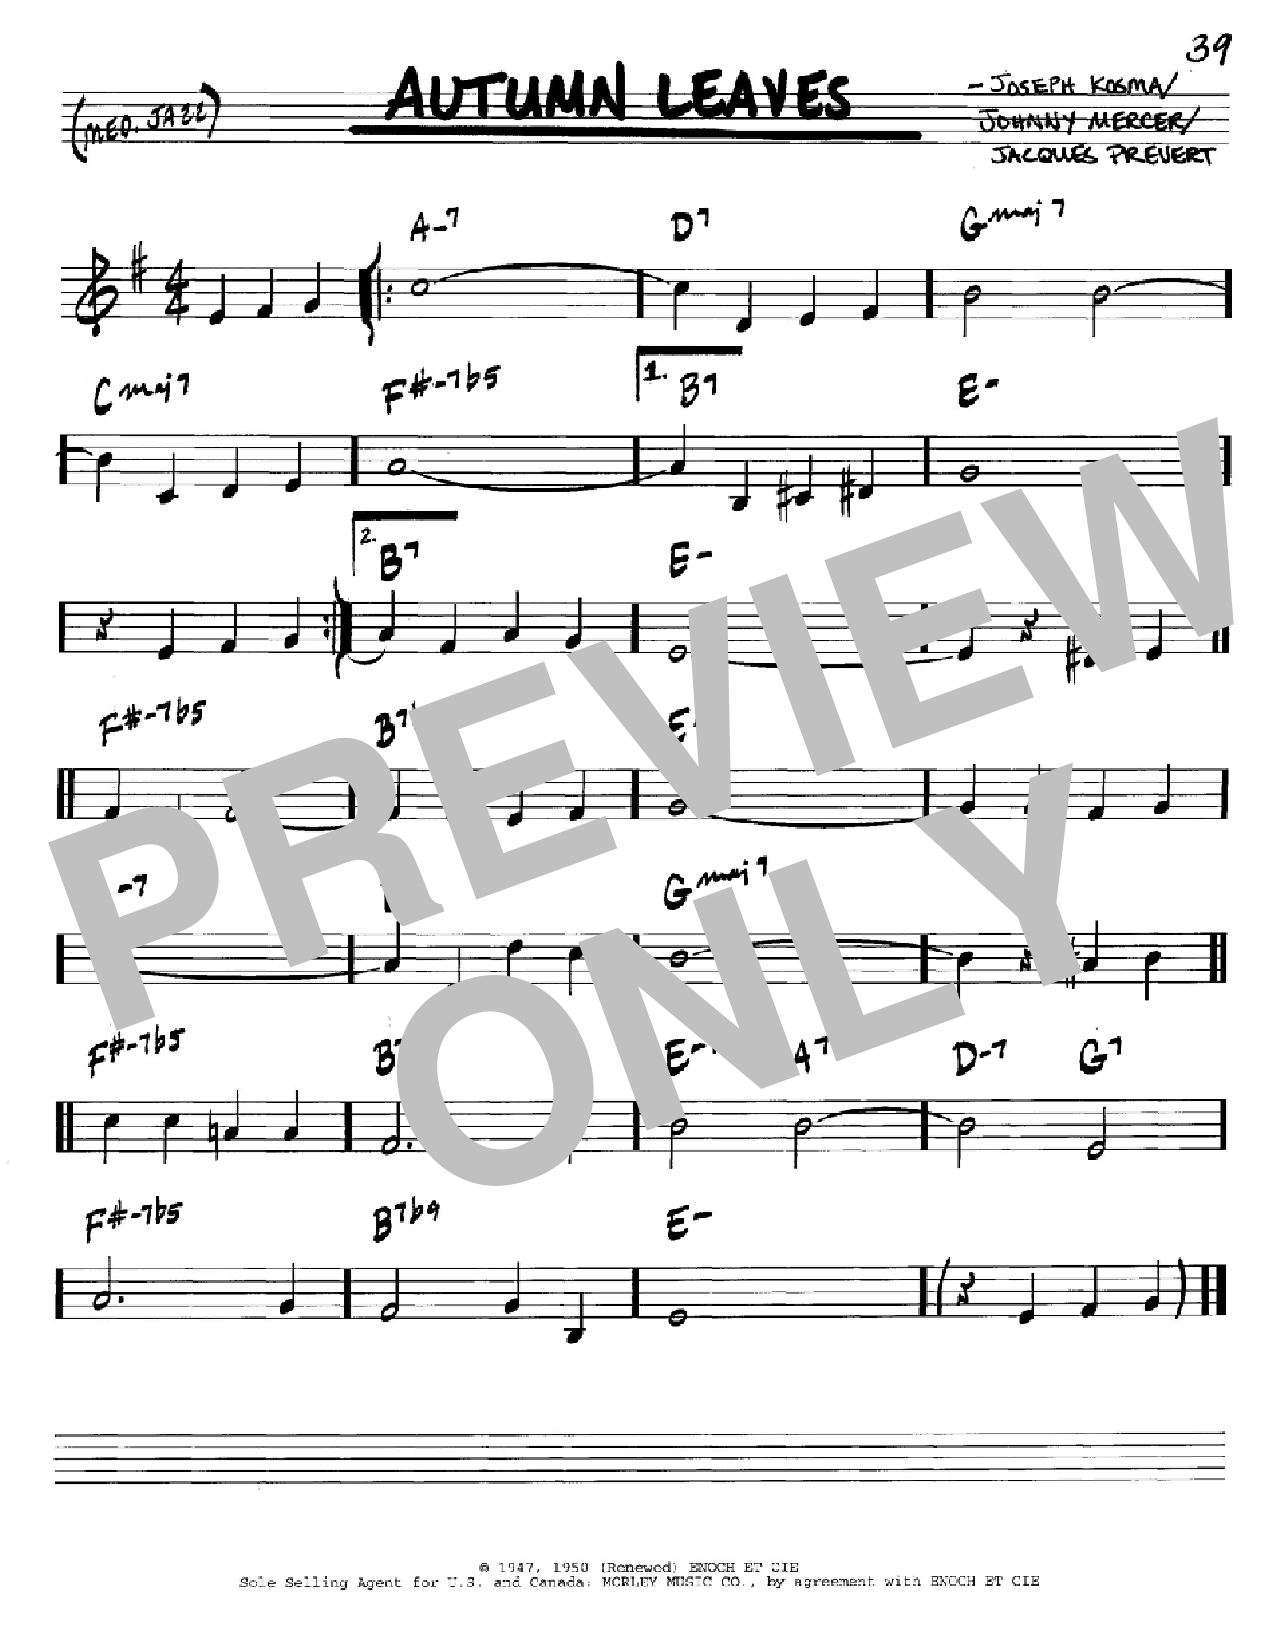 Johnny Mercer Autumn Leaves Sheet Music Notes & Chords for Ukulele - Download or Print PDF